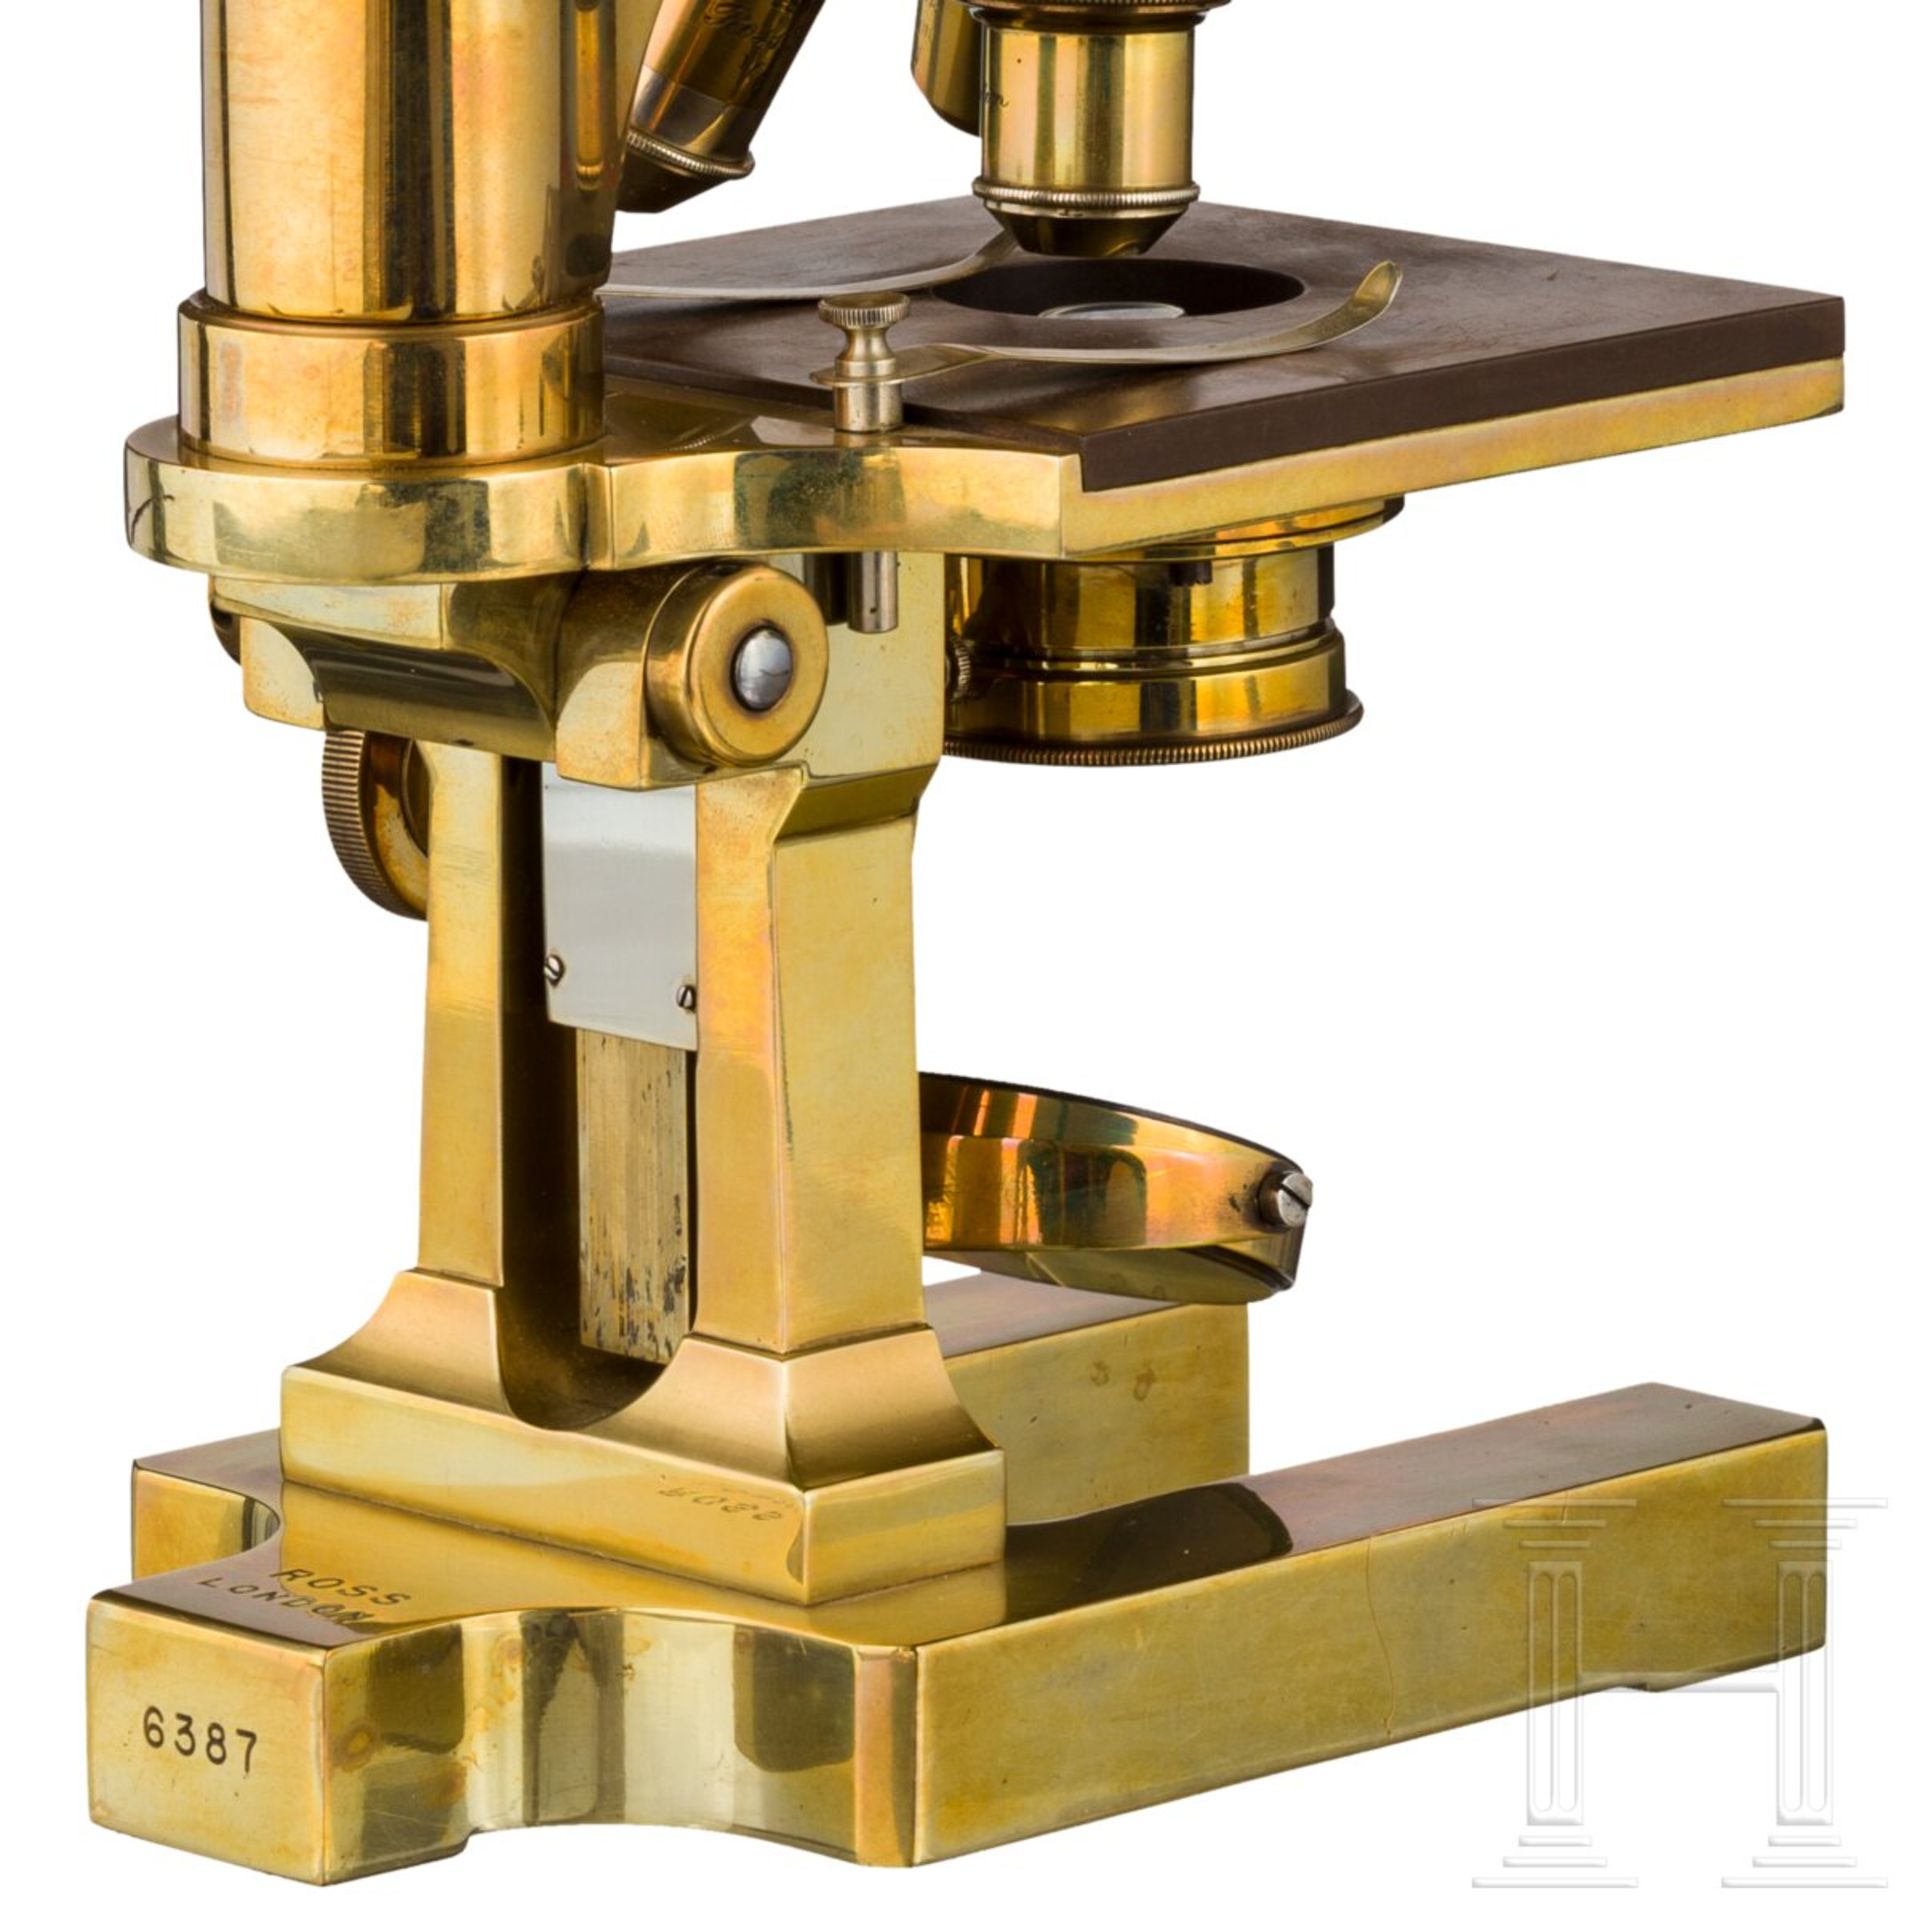 Mikroskop, Ross, London, um 1900 - Image 3 of 3